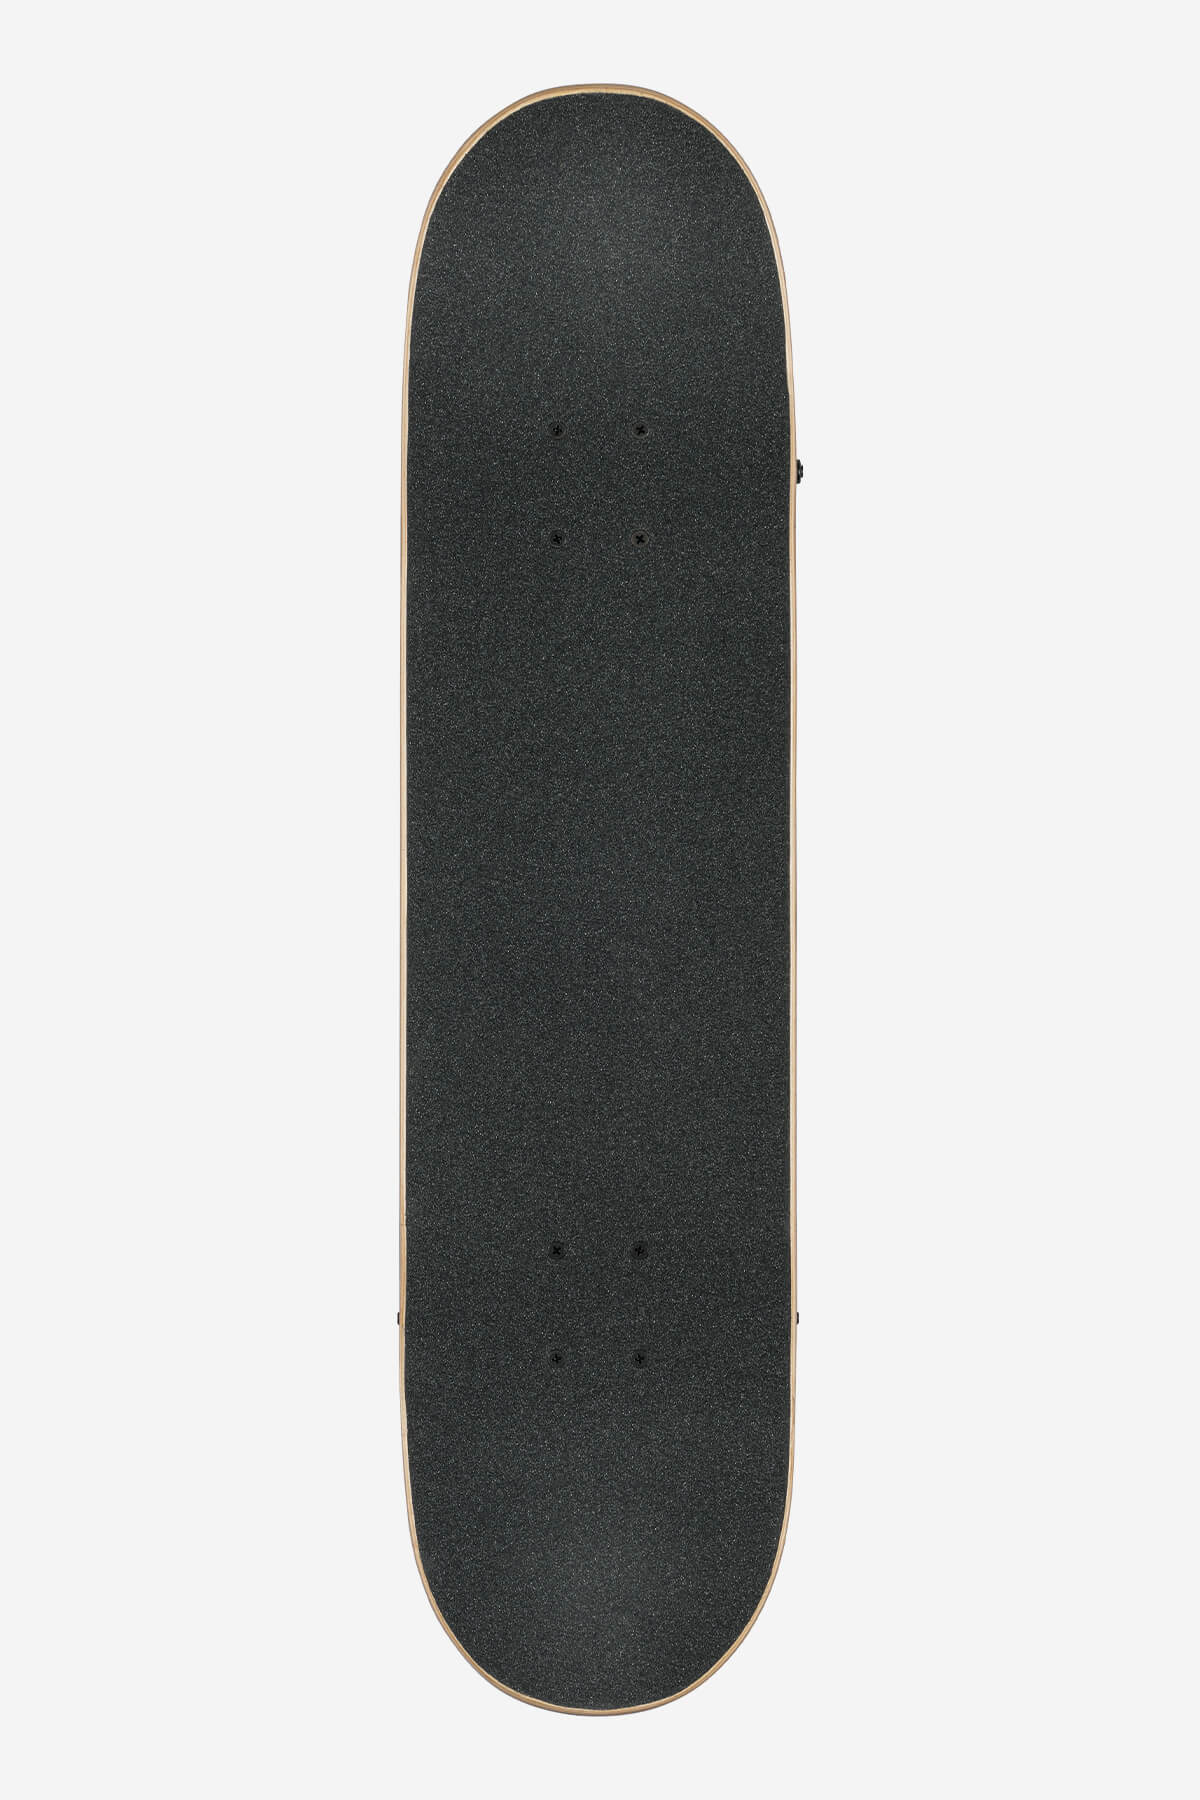 Globe - G1 Lineform - Negro - 7,75" Completo Skateboard